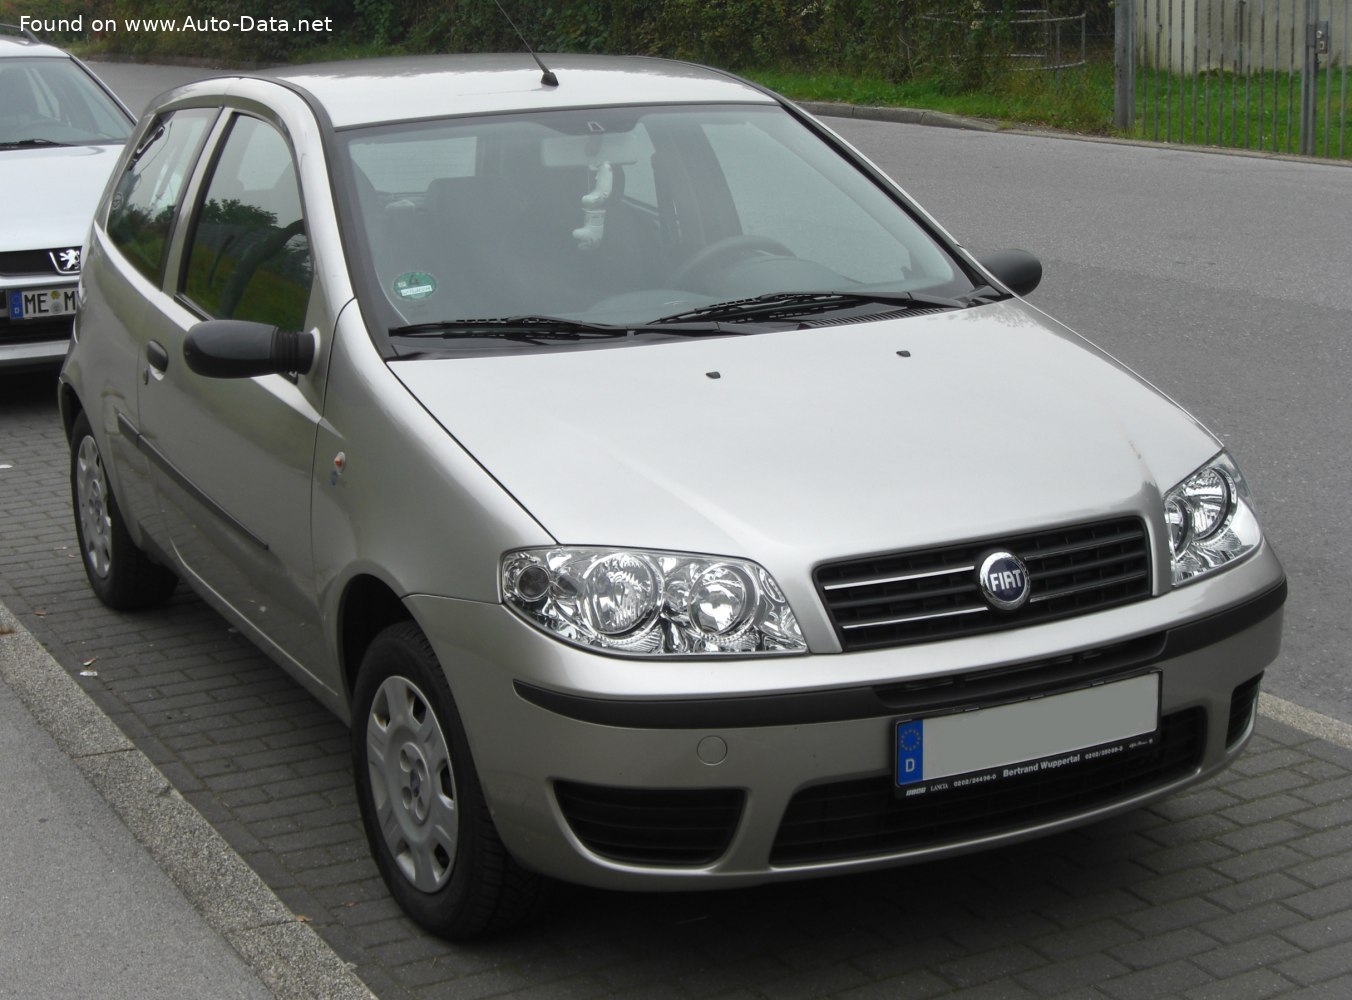 2003 Fiat Punto II (188, facelift 2003) 3dr 1.4 (95 Hp)